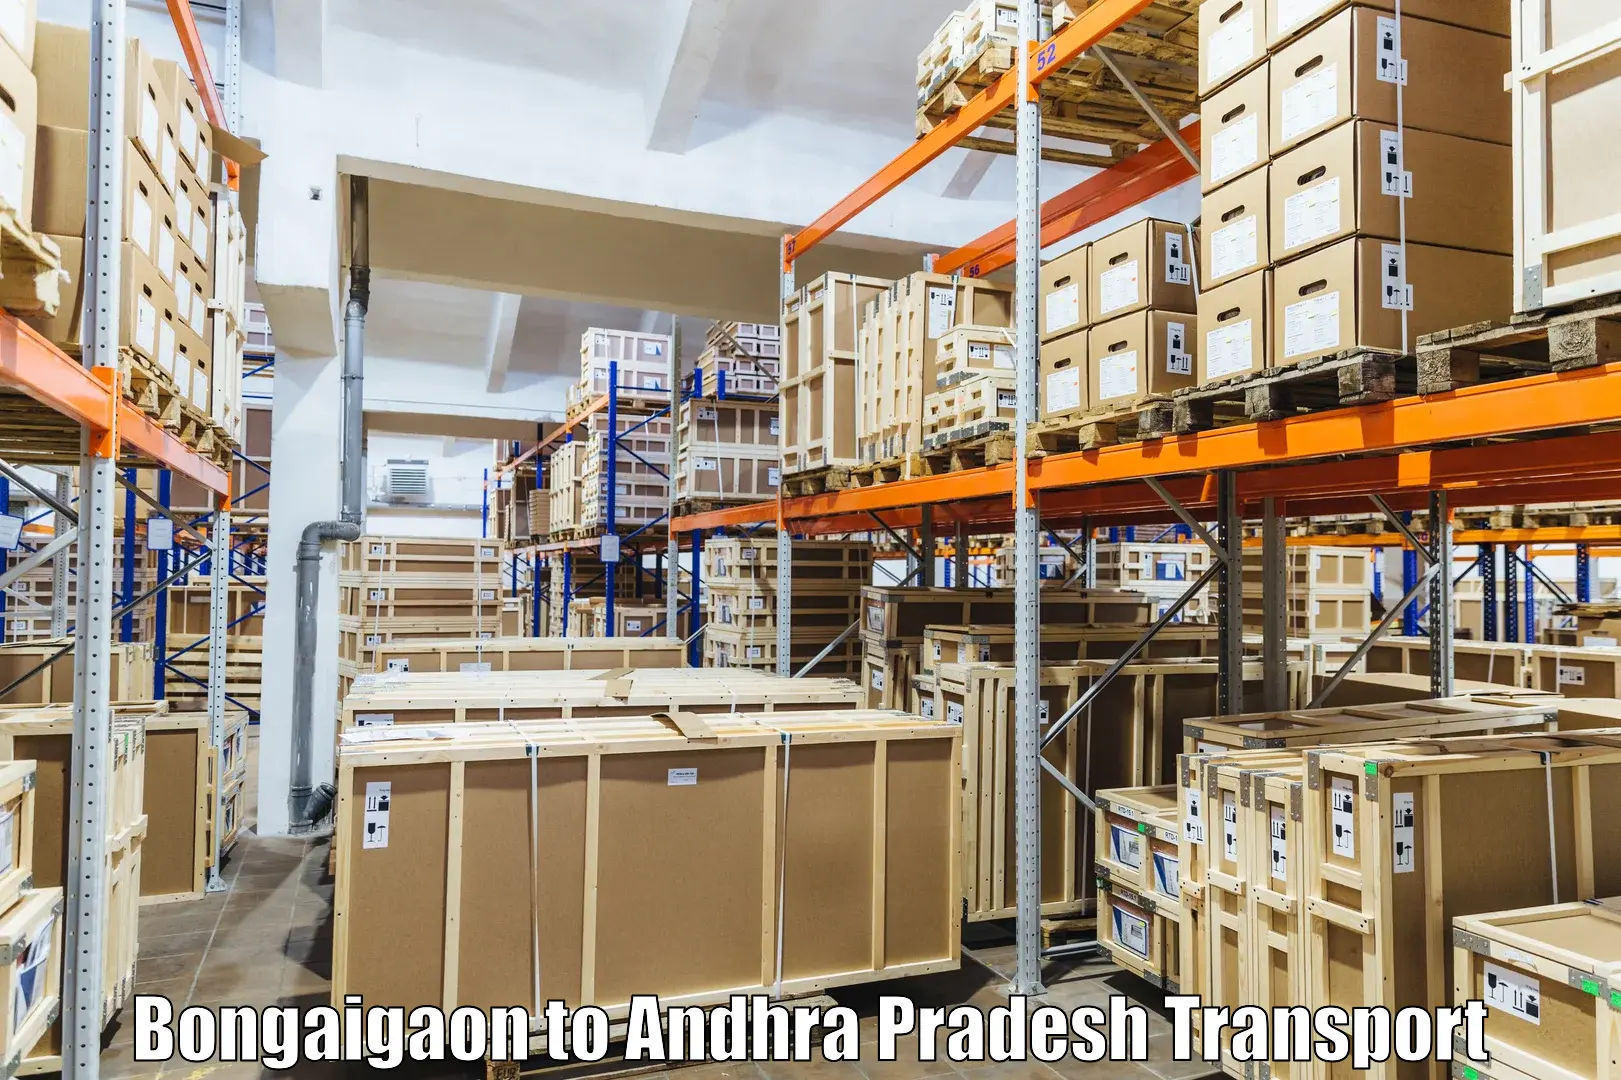 Truck transport companies in India Bongaigaon to Kalyandurg